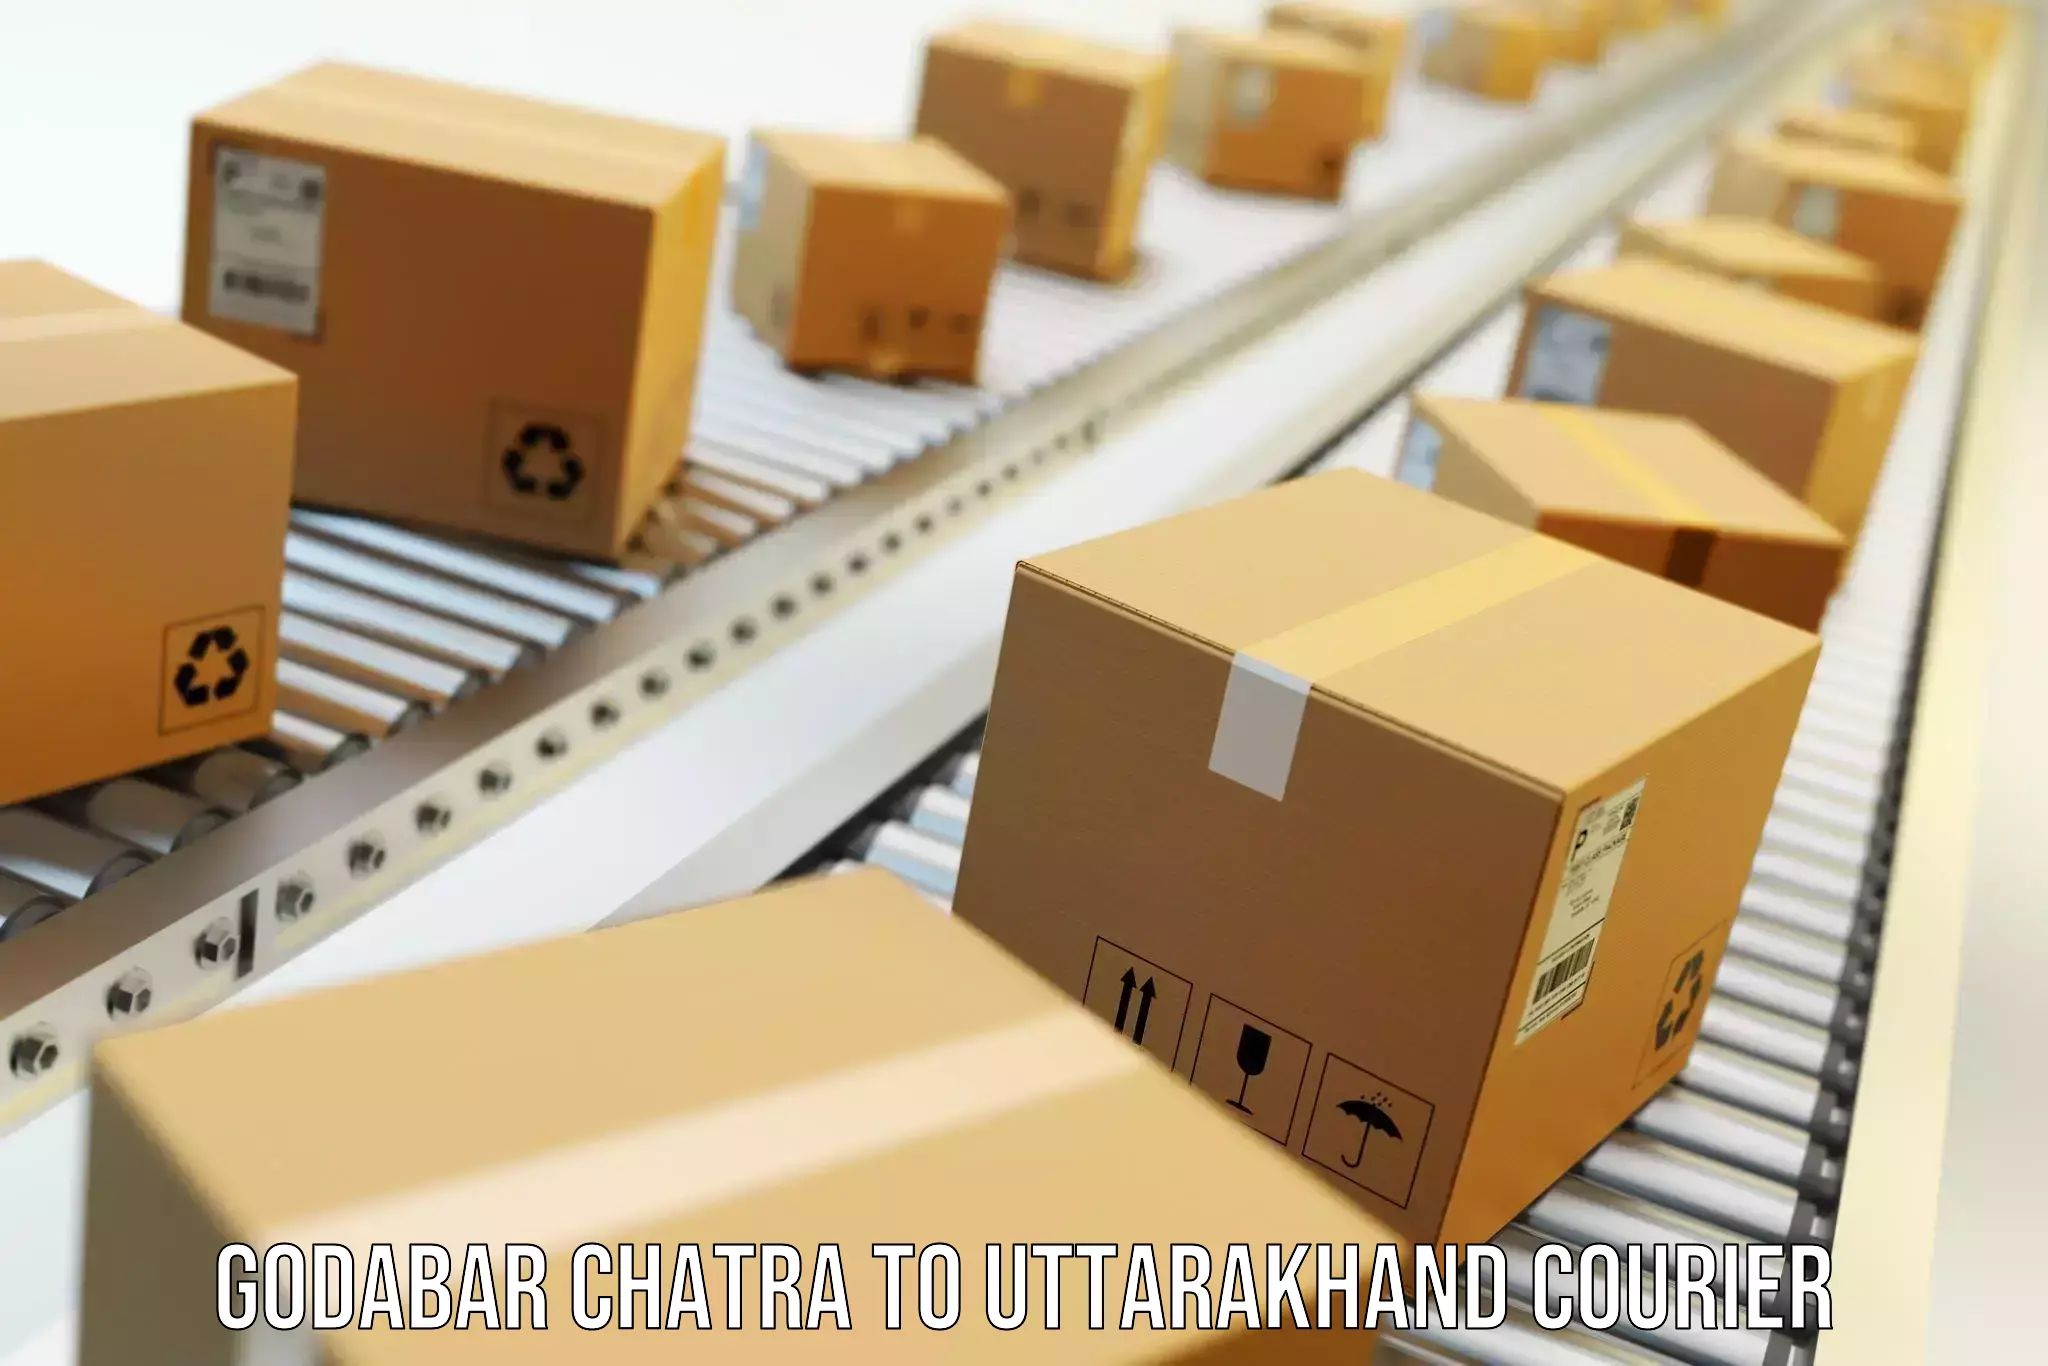 Efficient moving company Godabar Chatra to Bhagwanpur